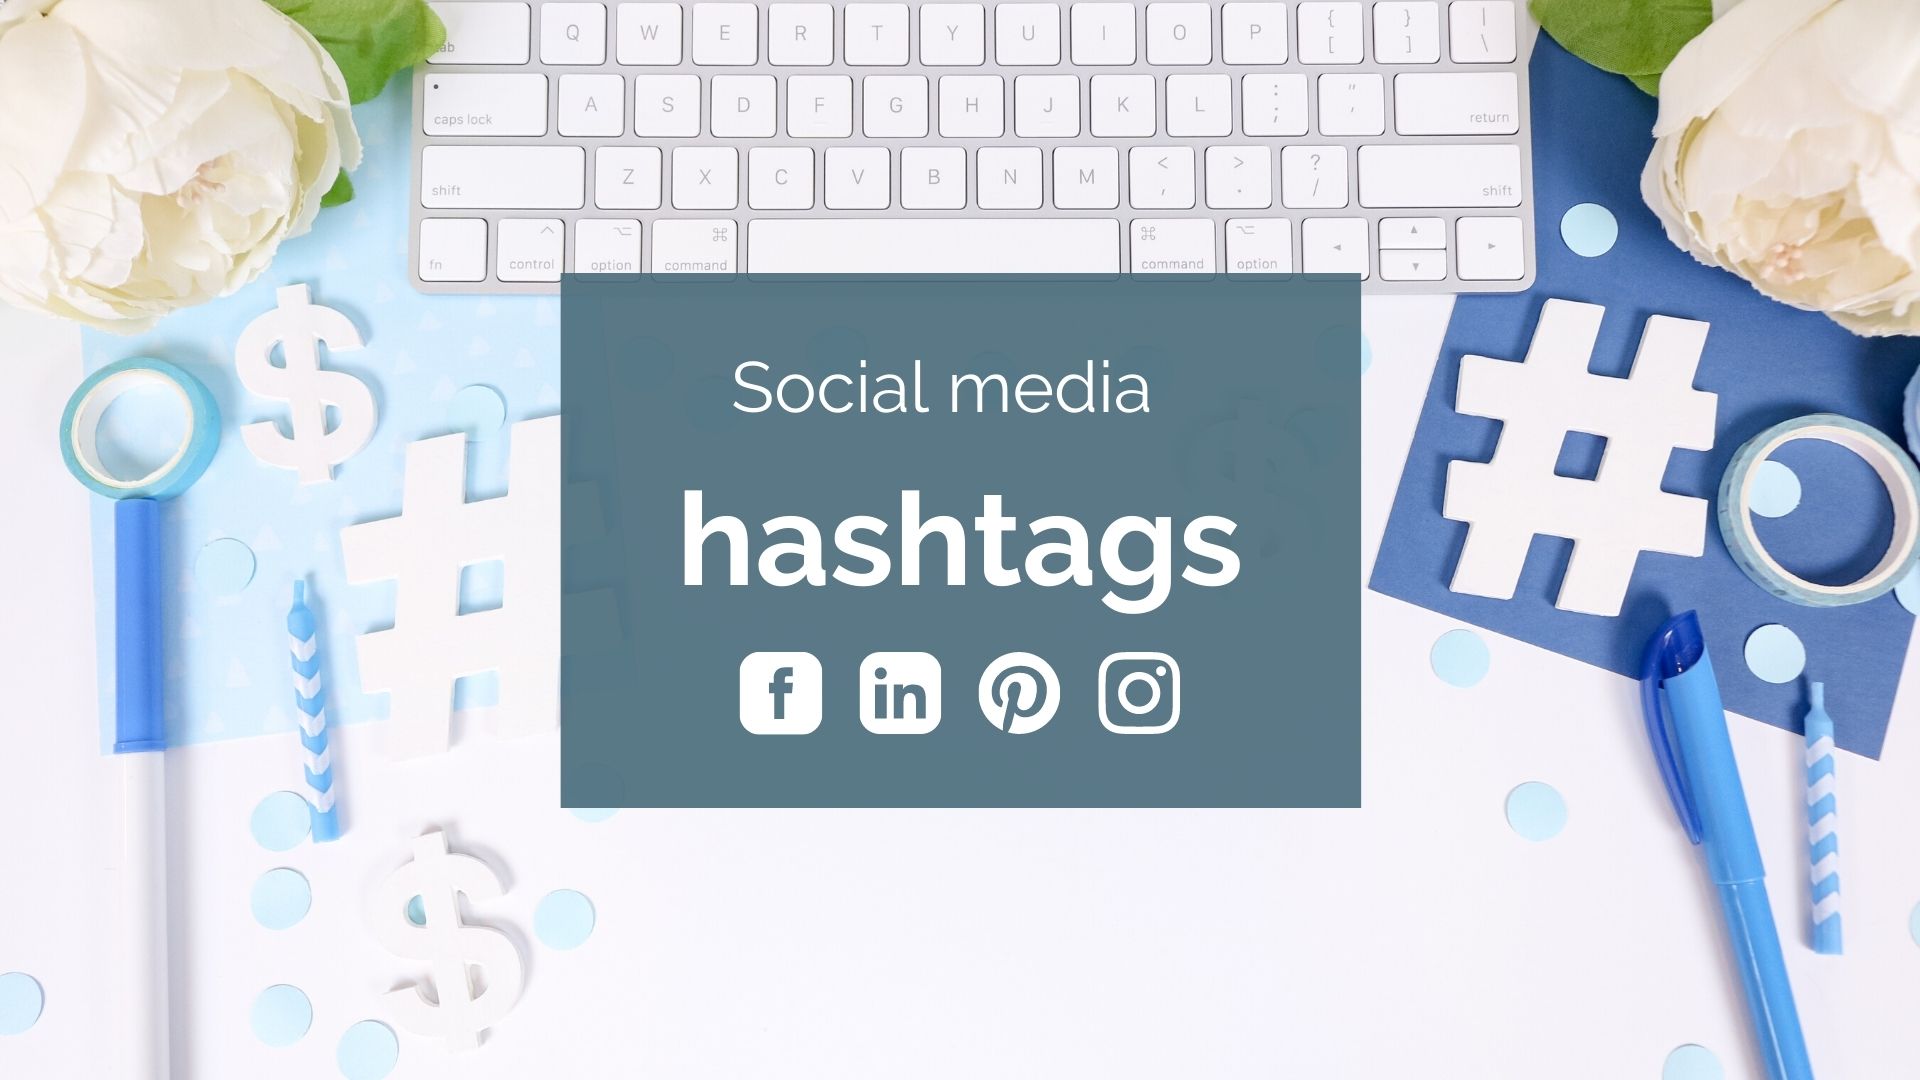 Social media hashtags